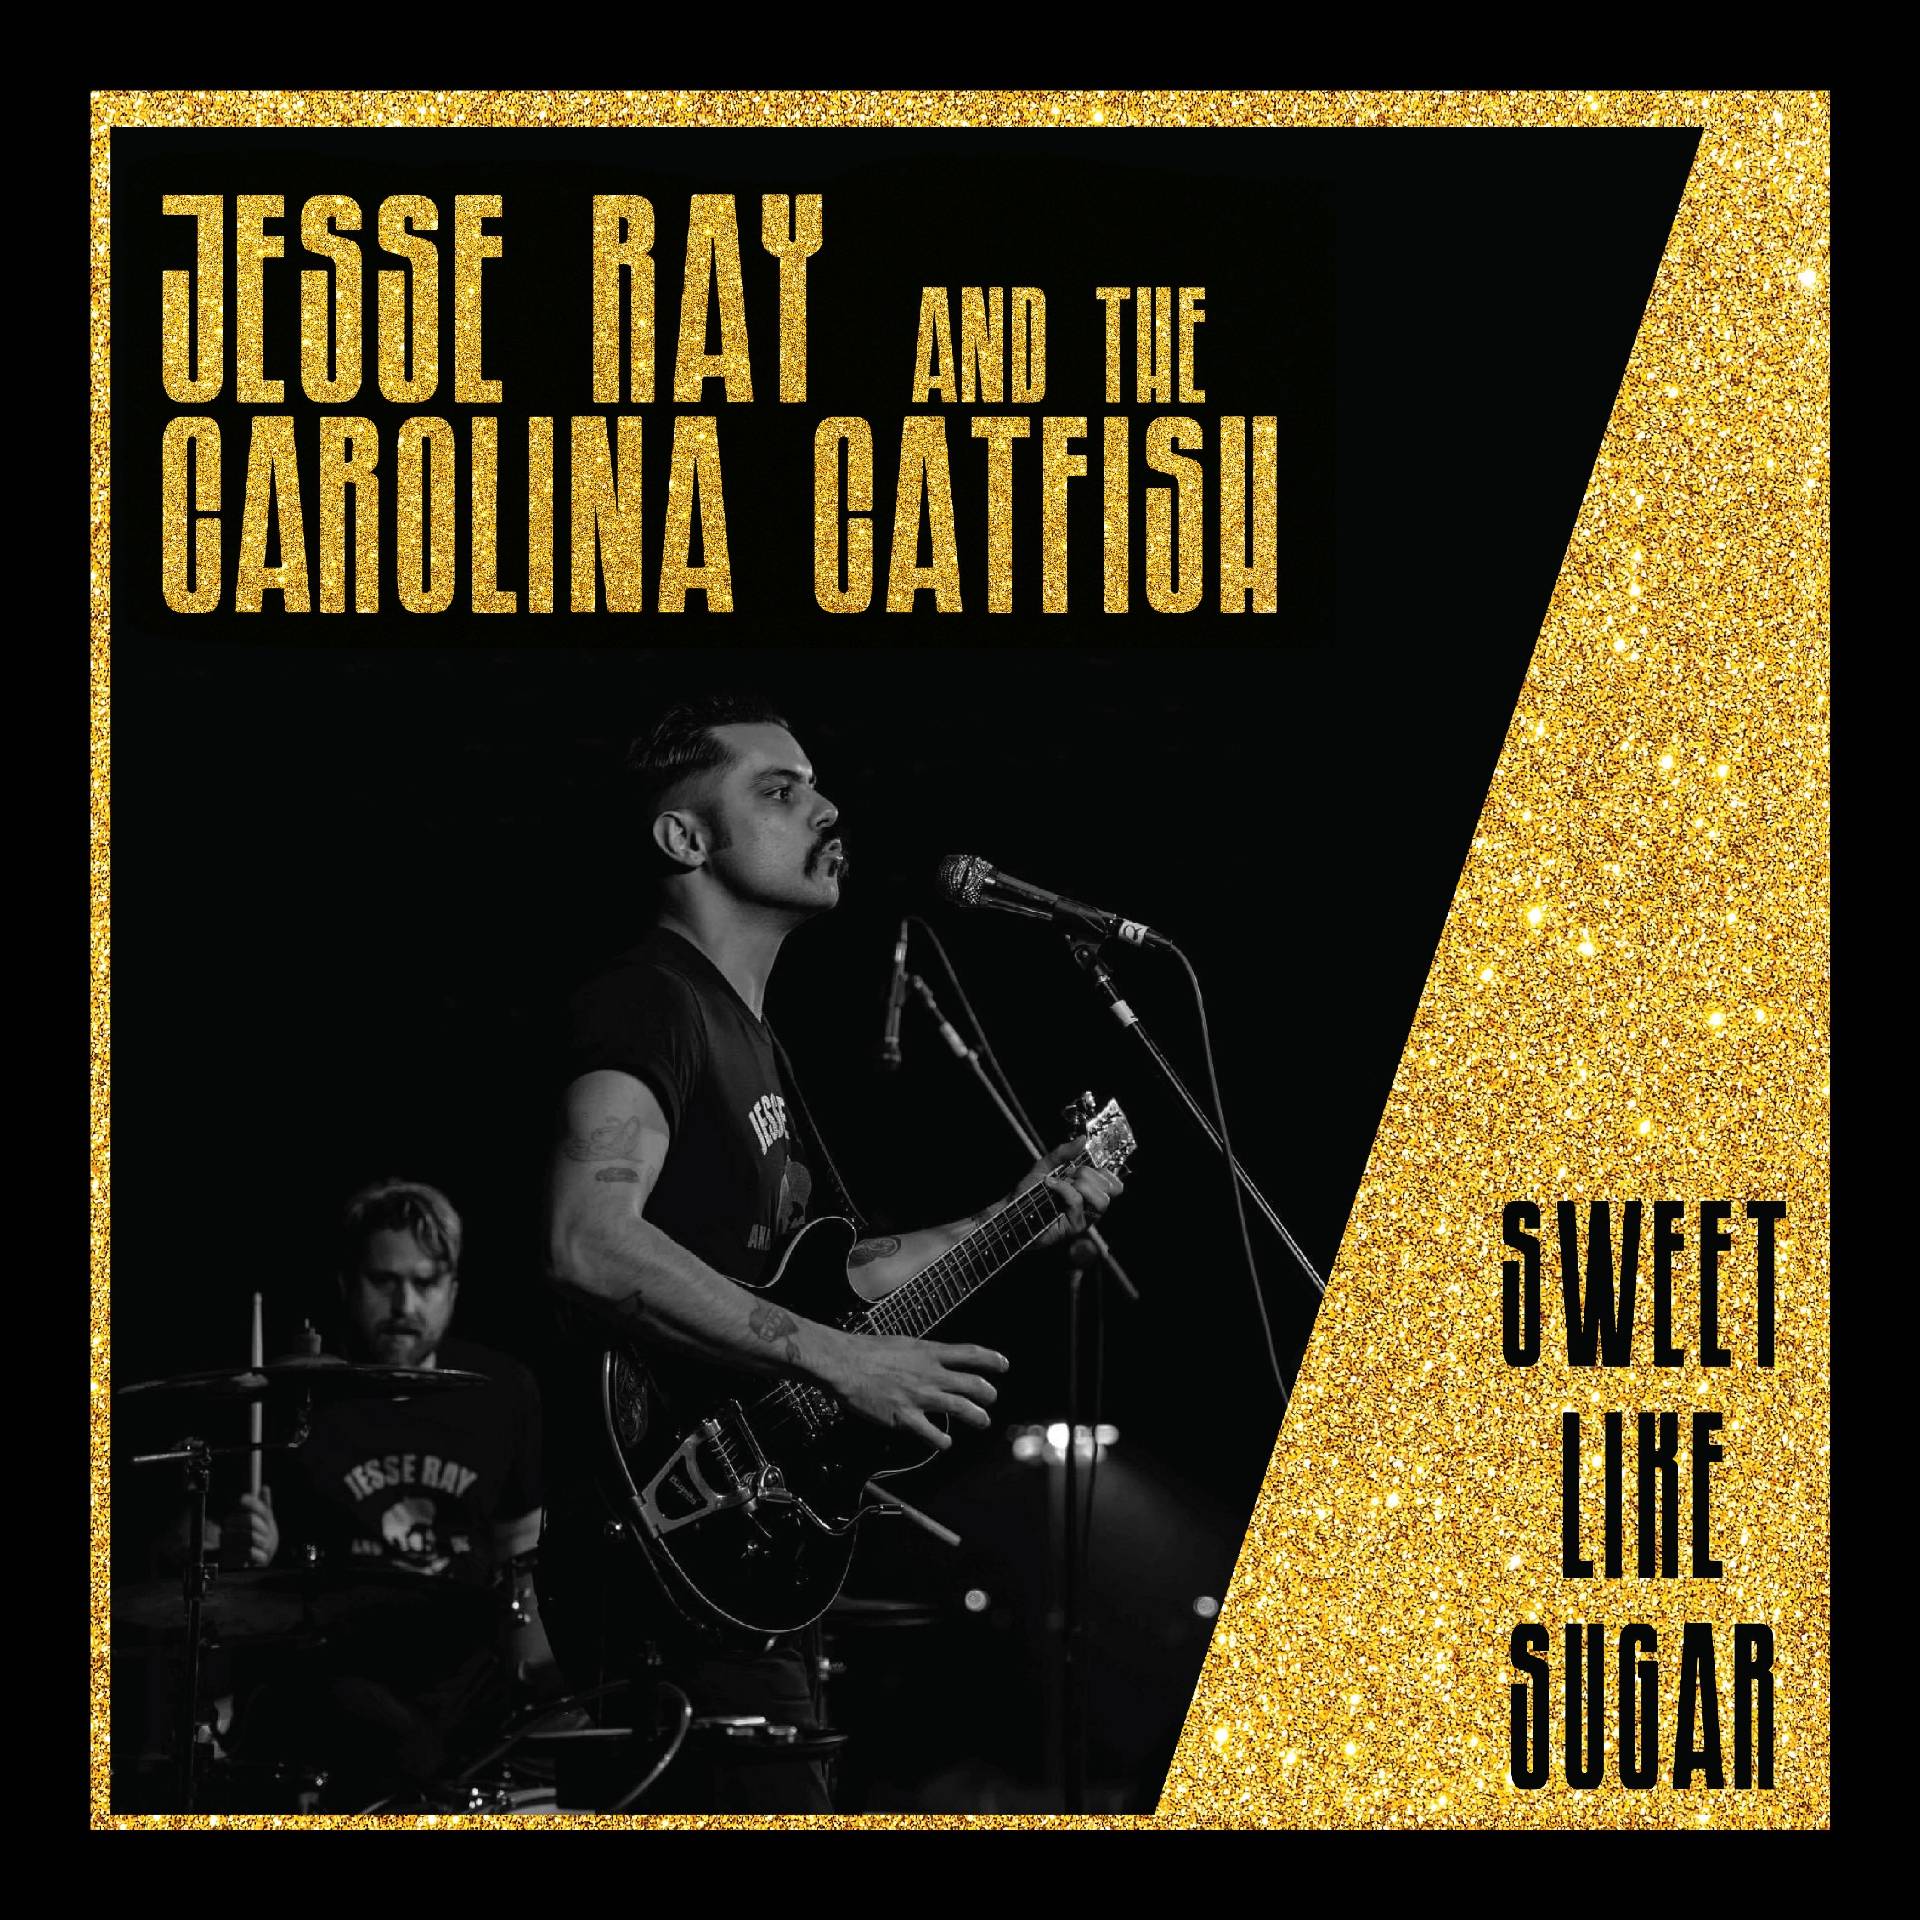 Jesse Ray & The Carolina Catfish “Sweet Like Sugar” single artwork